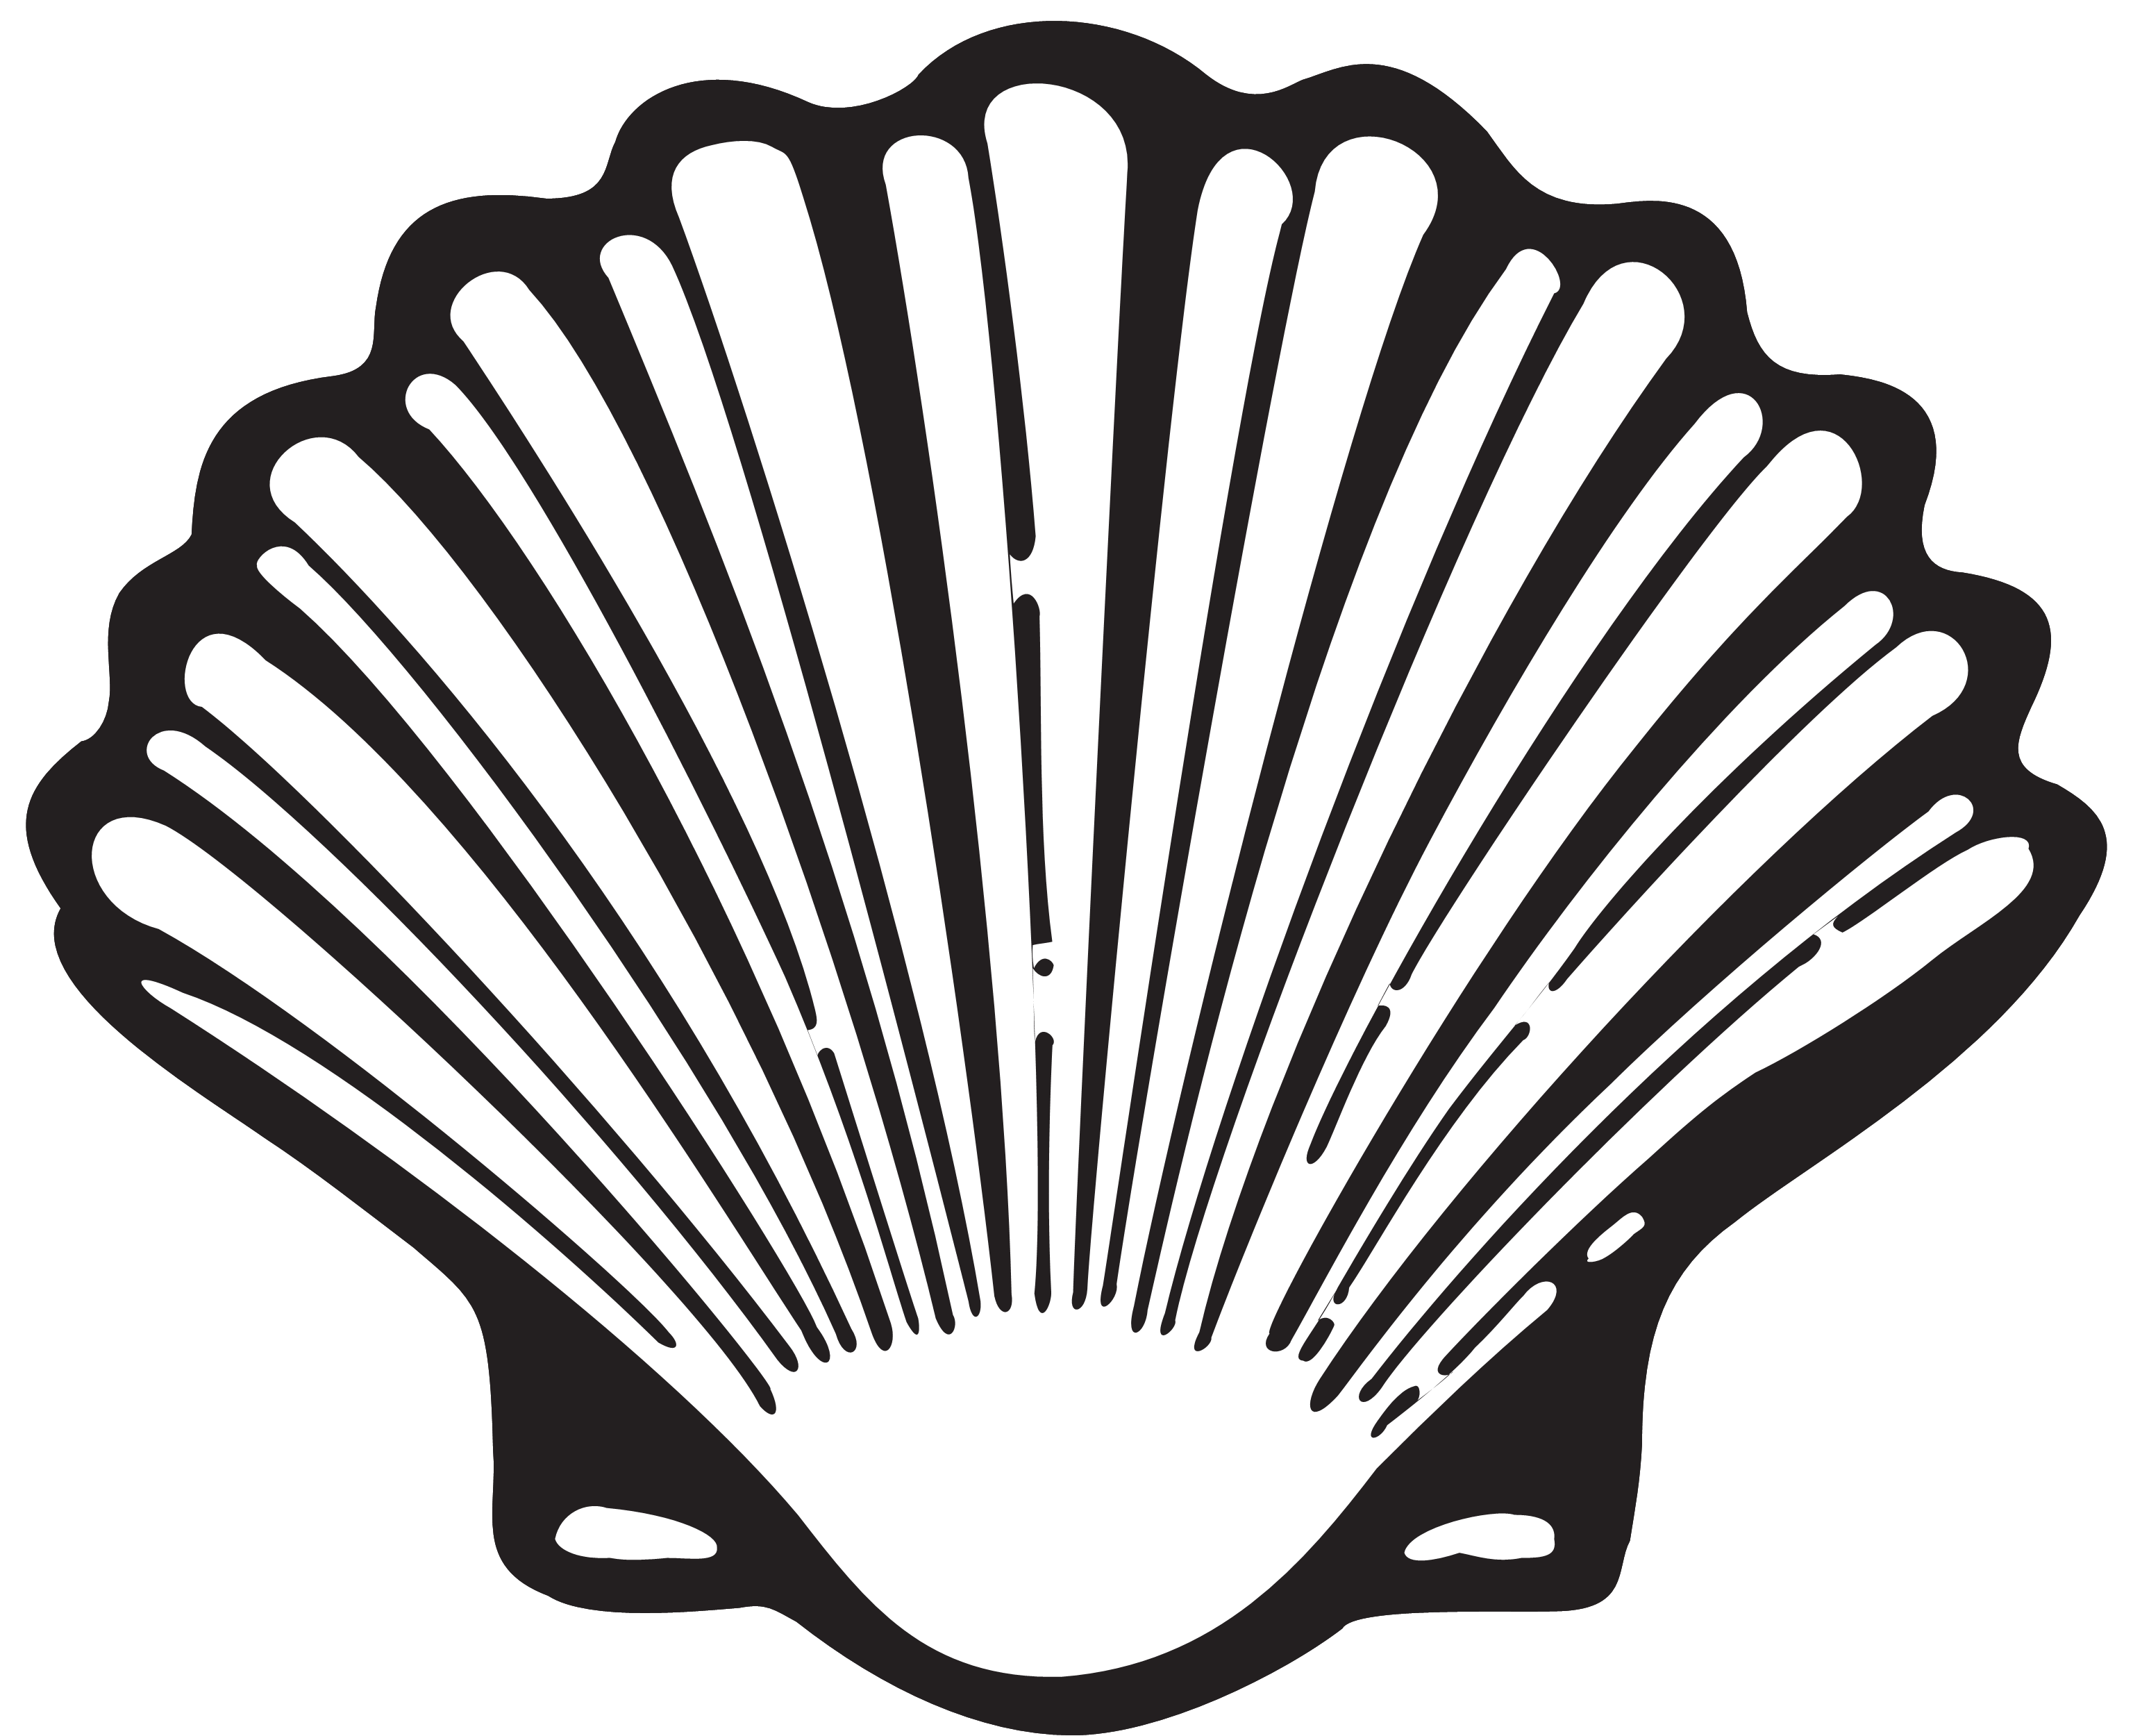 Shell Oil Logo - Shell | Logopedia | FANDOM powered by Wikia